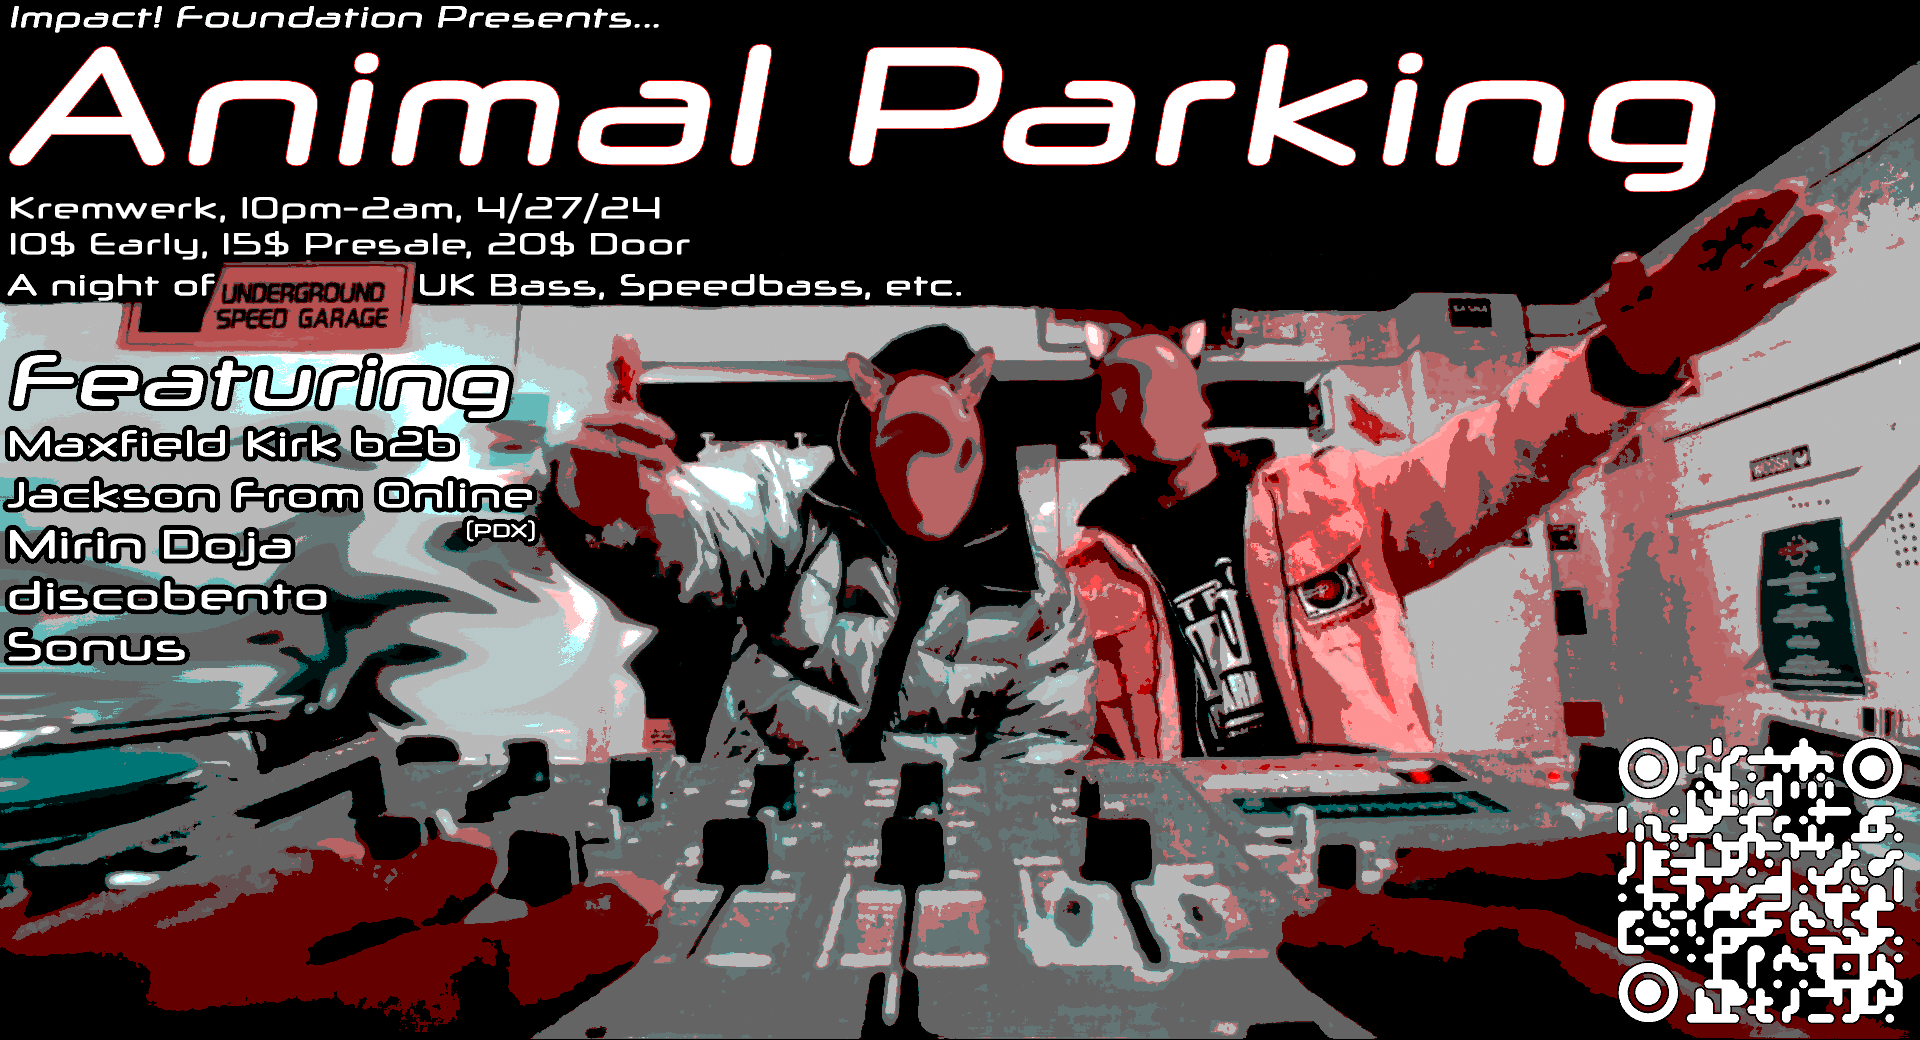 animal parking flyer 4/27 kremwerk